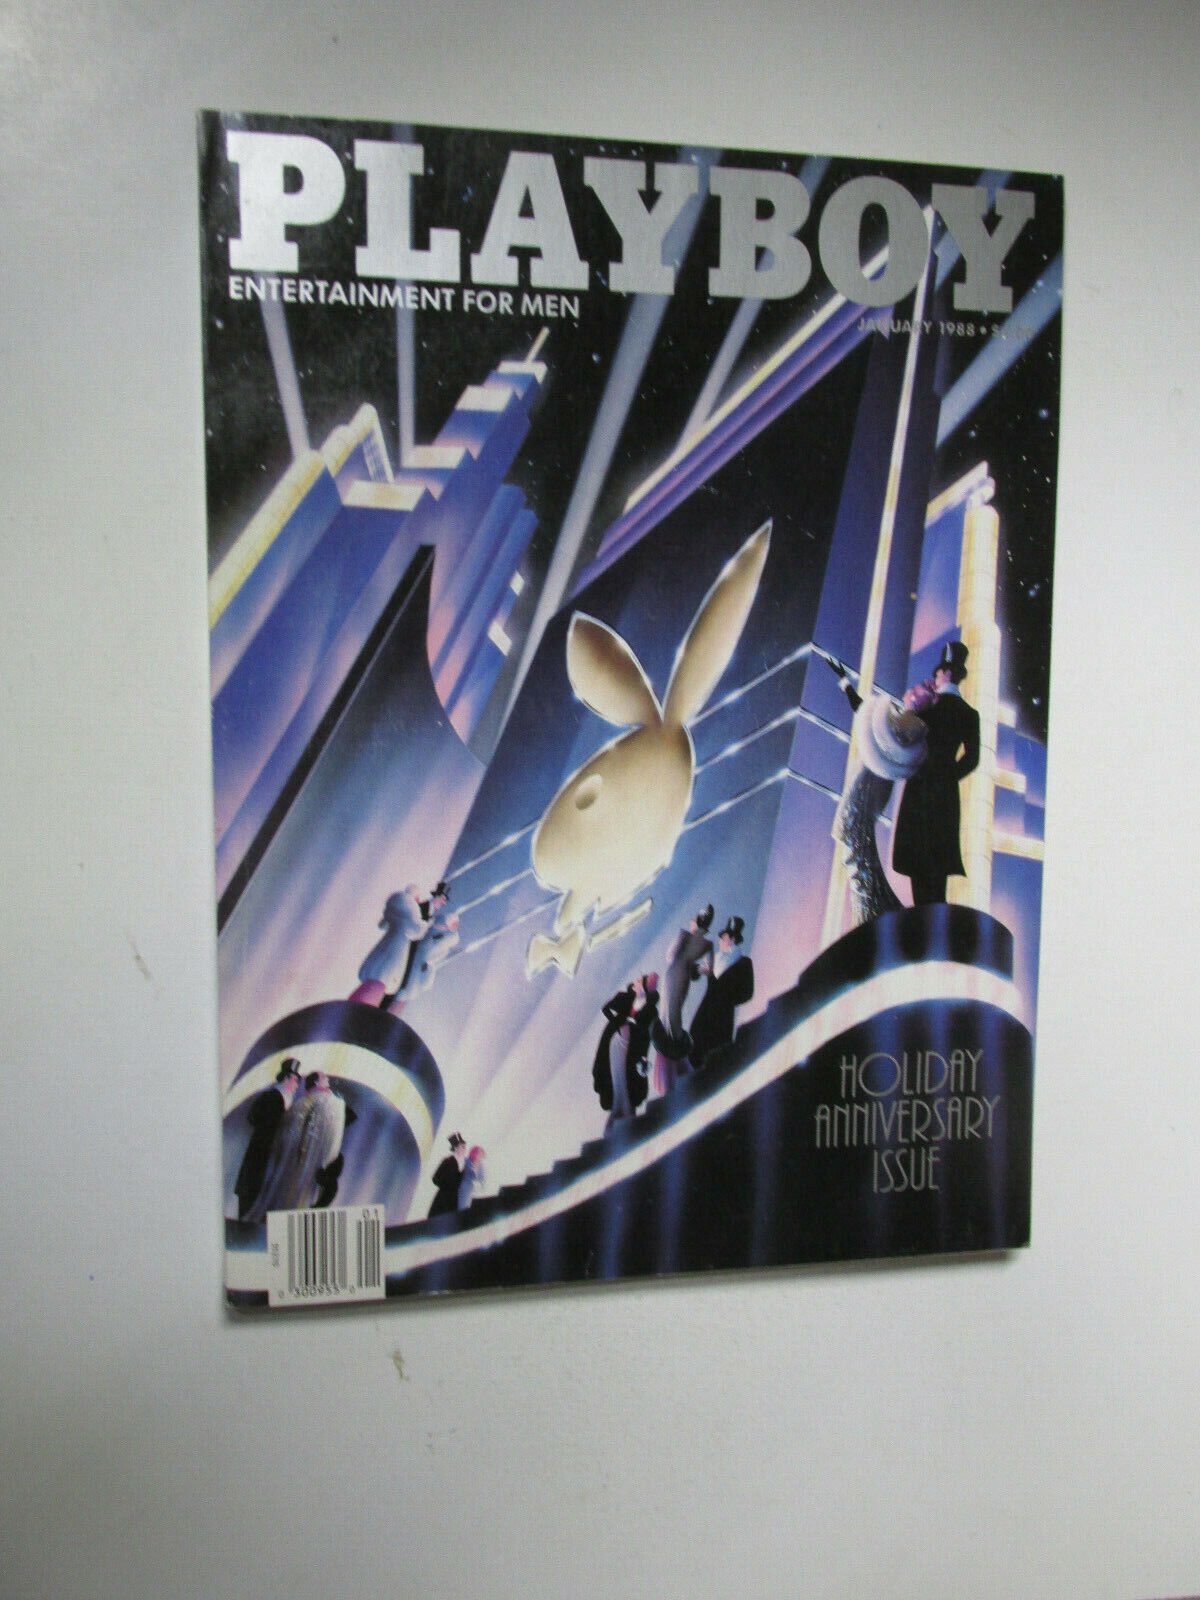 Playboy January 1988 